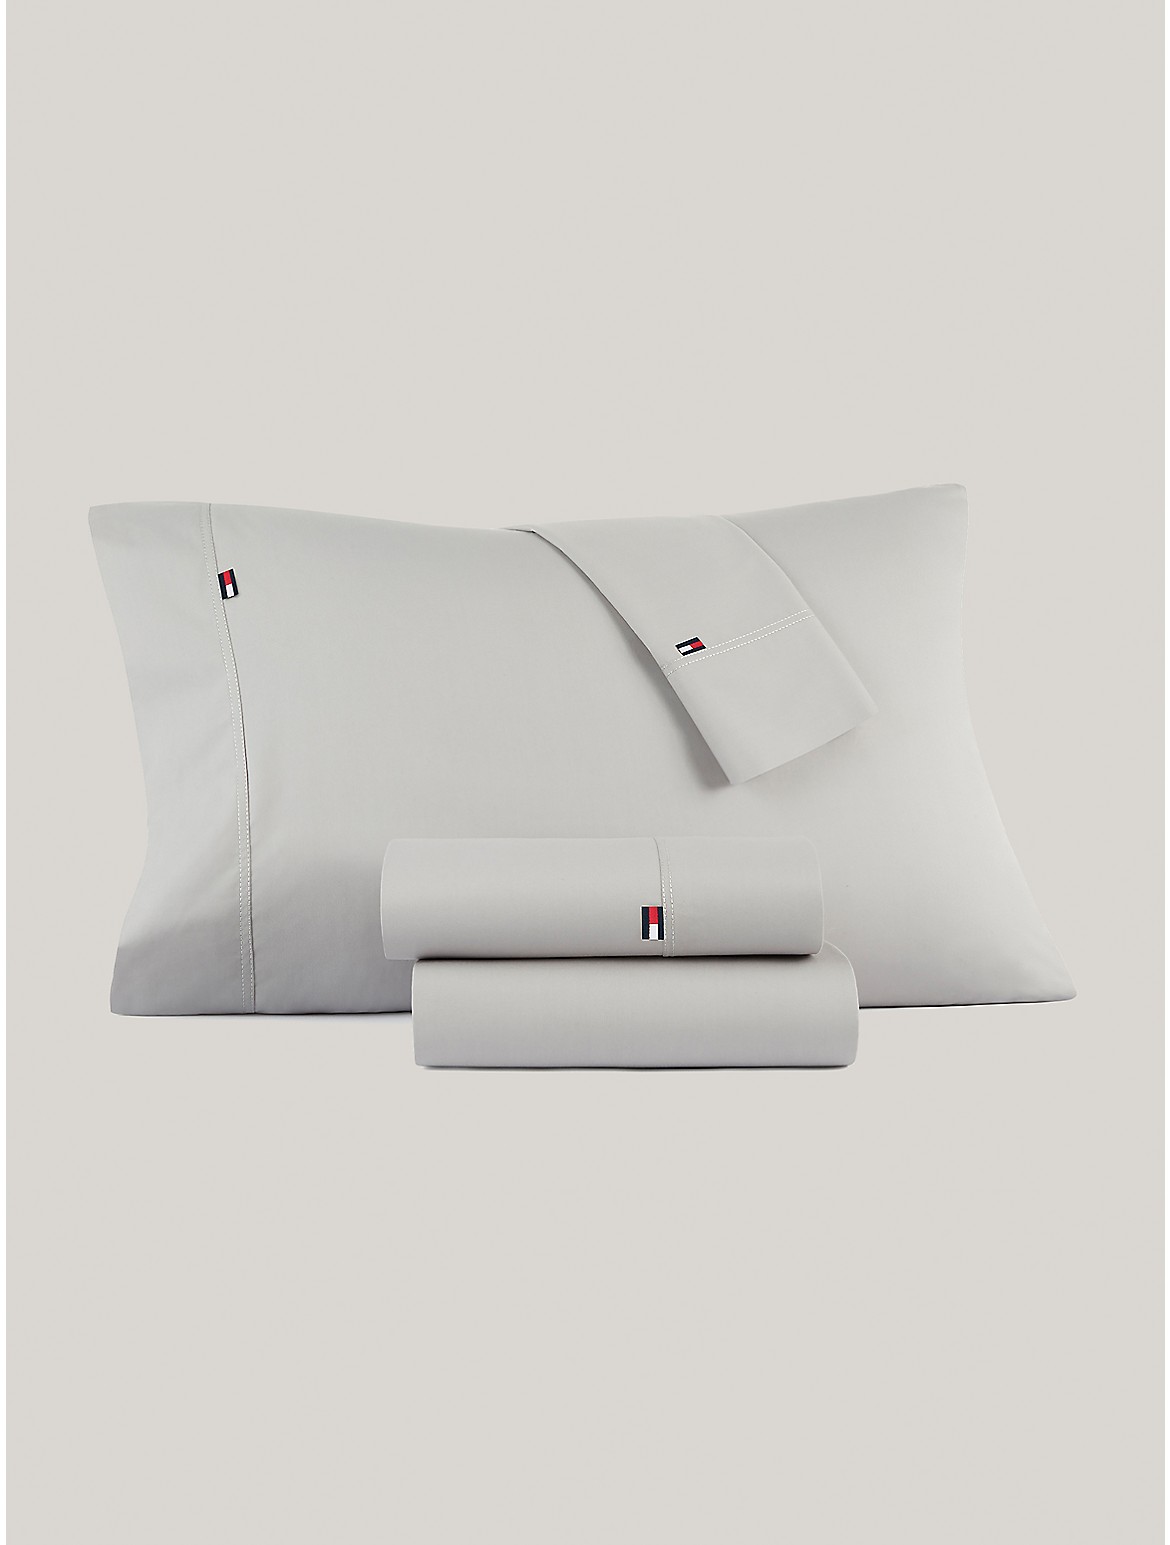 Tommy Hilfiger Signature Solid Gray Pillowcase Set - Grey - KING